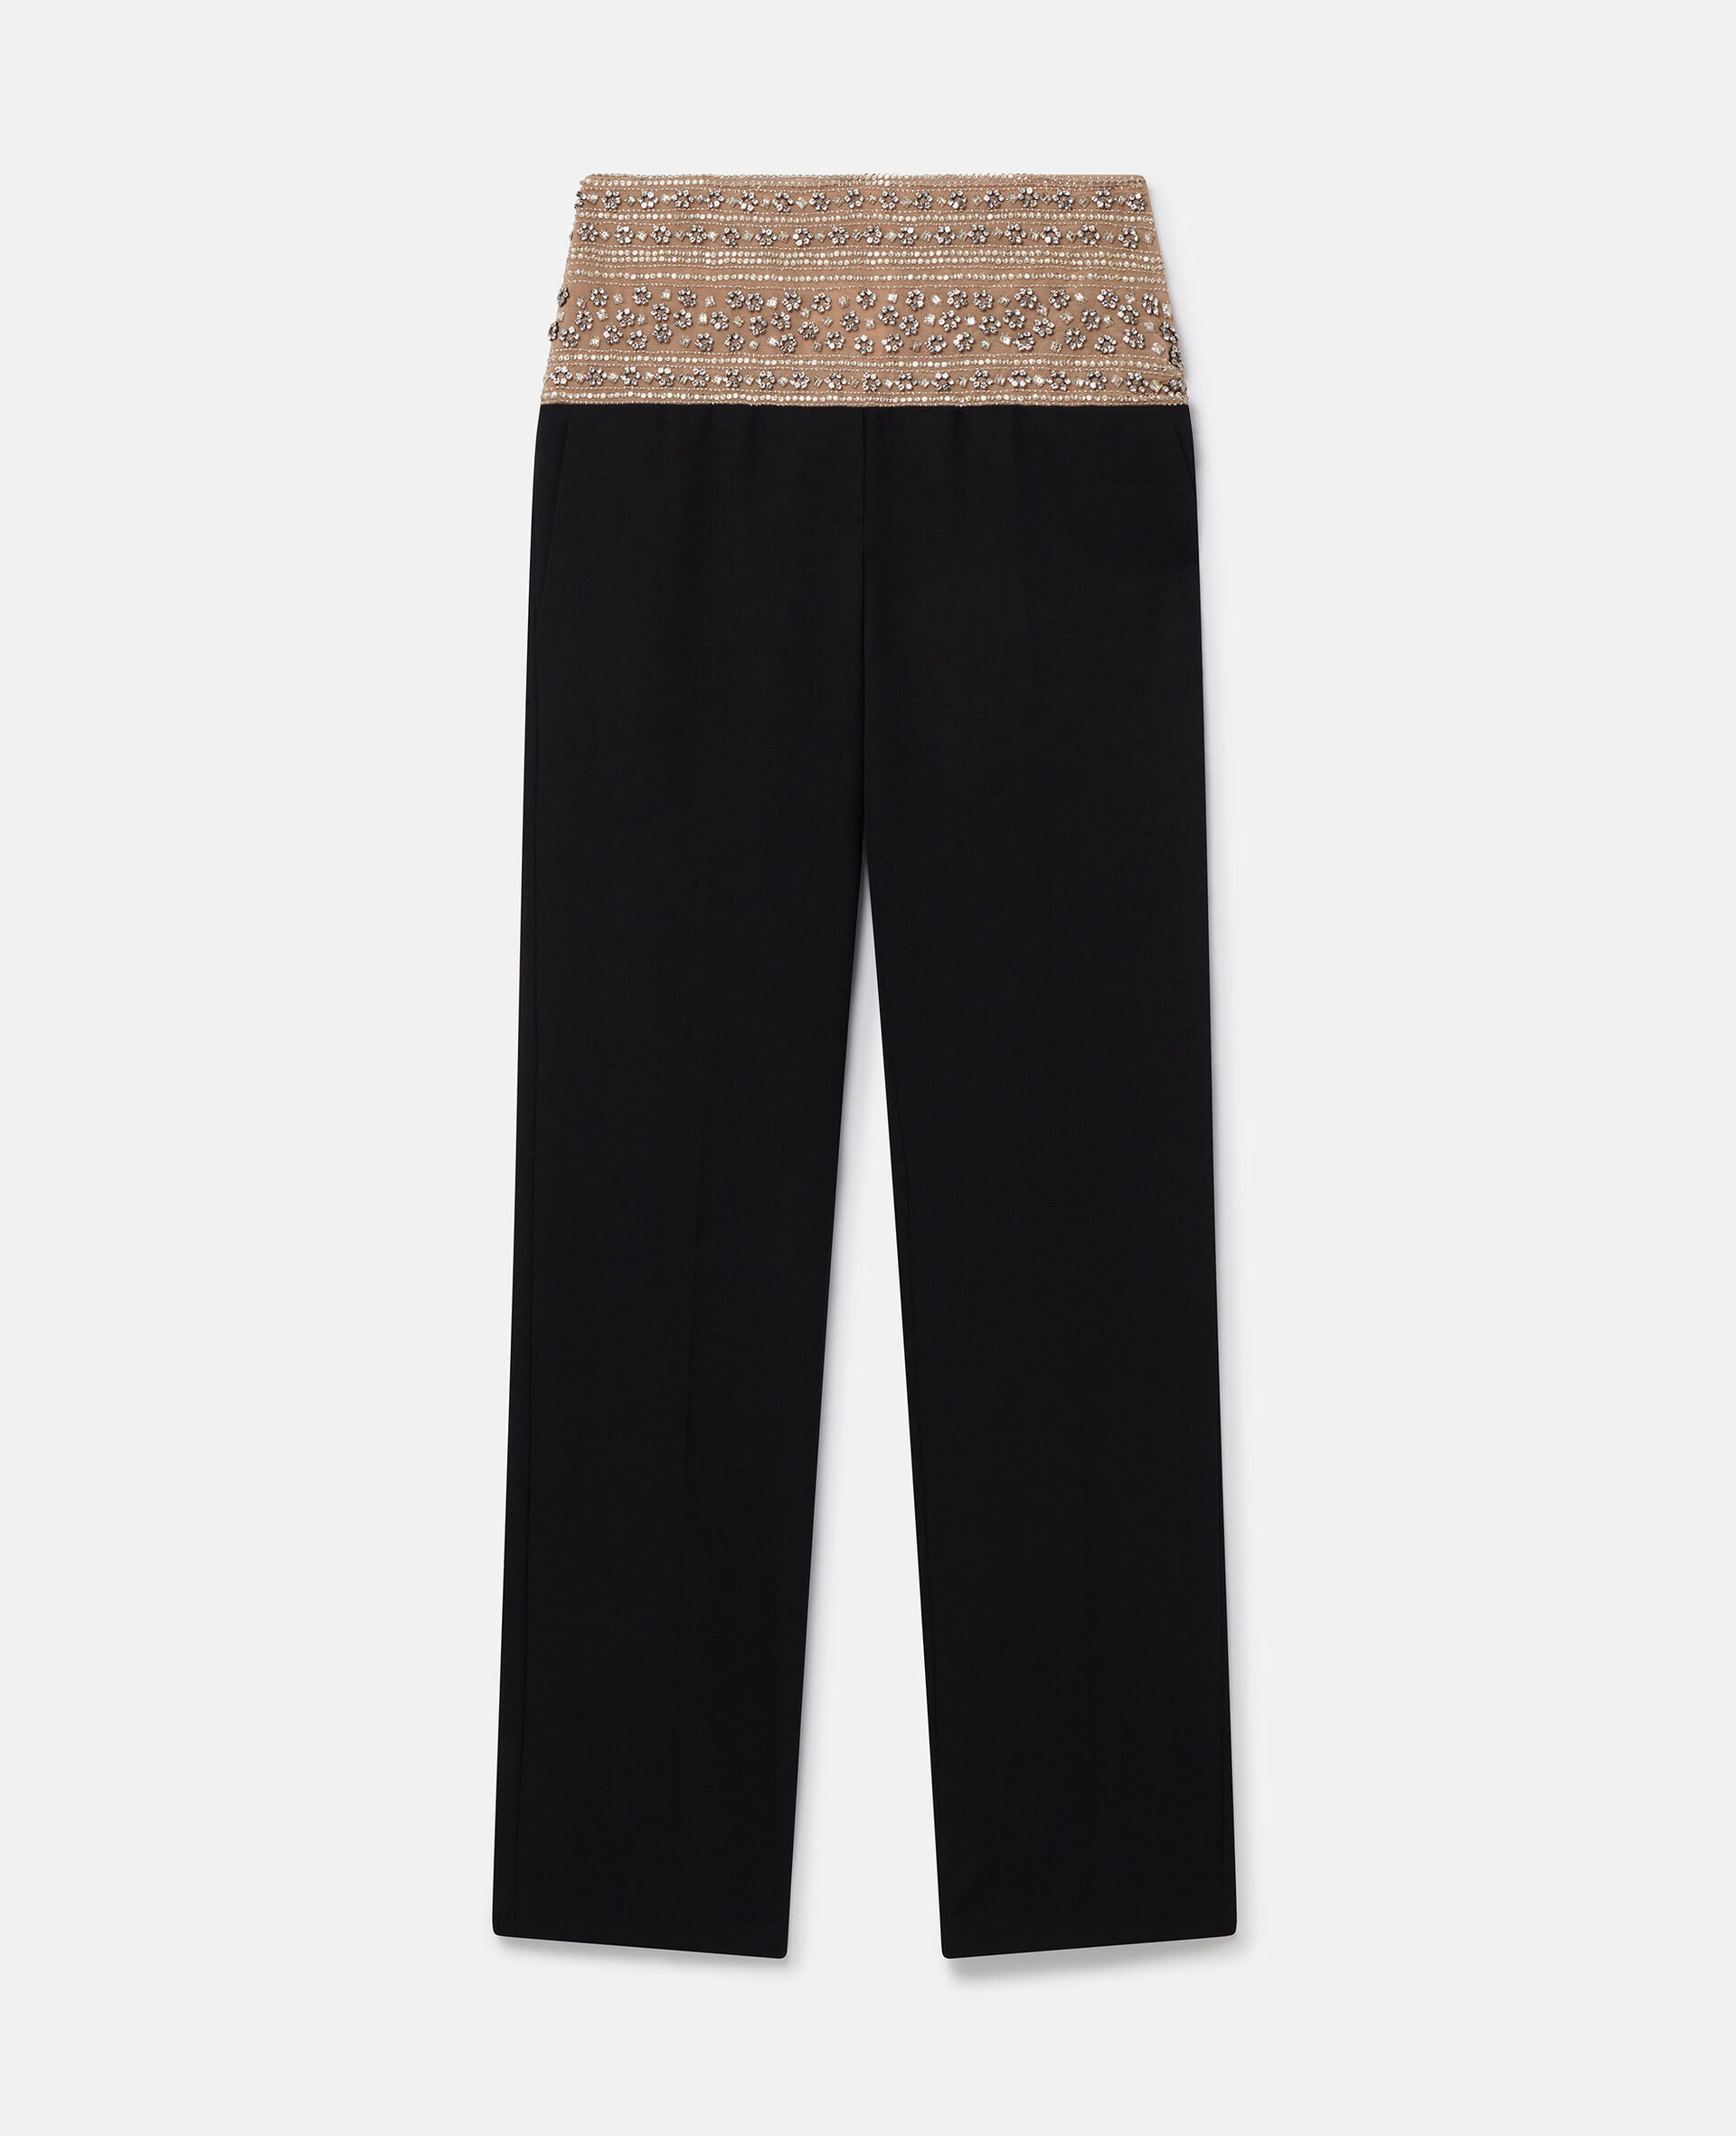 Pantaloni in lana decorati con cristalli-Nero-large image number 0